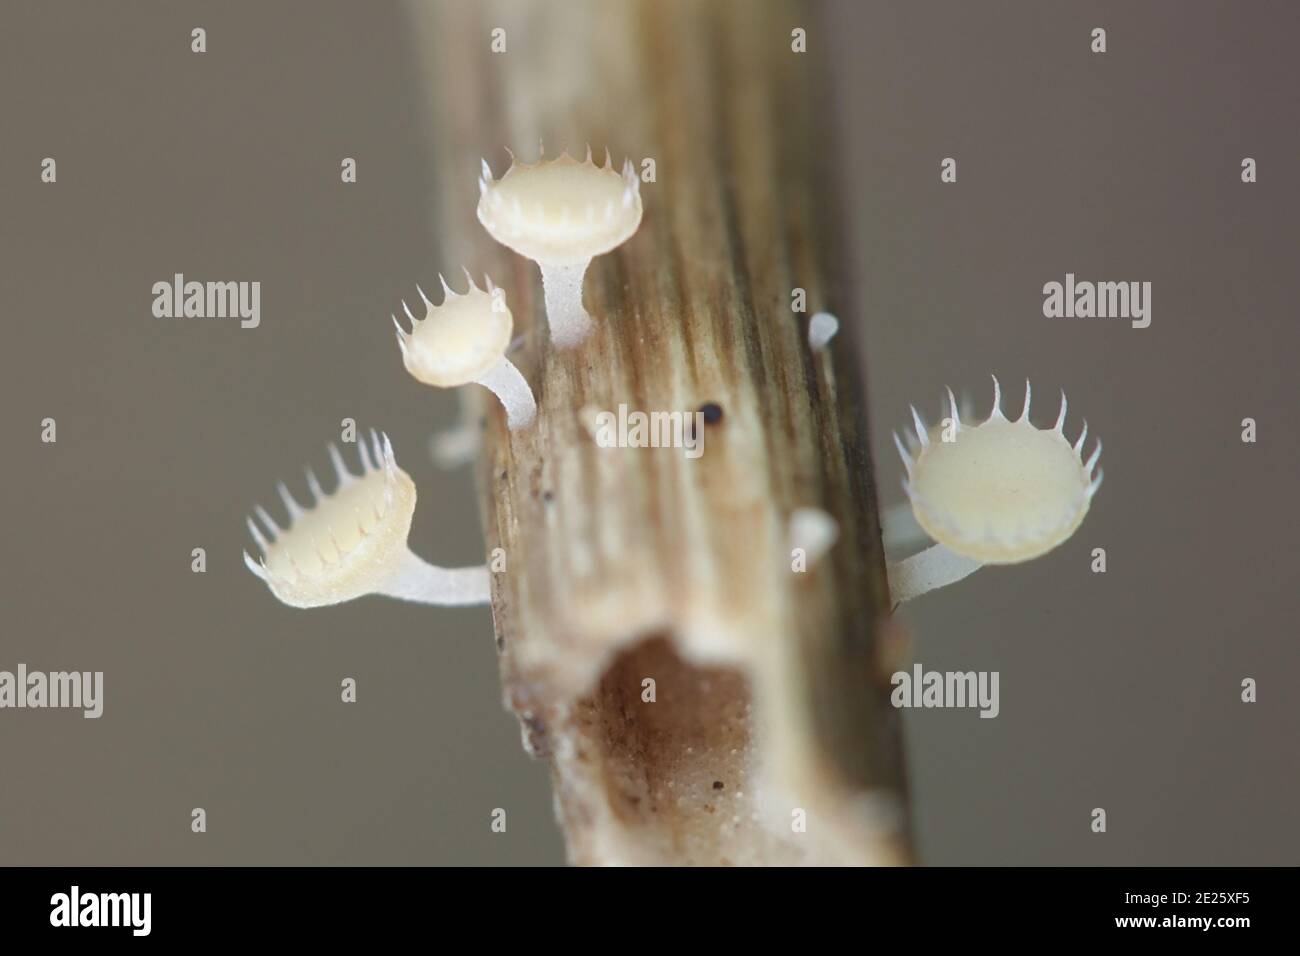 Crocicreas coronatum, also known as Cyathicula coronata, wild fungus from Finland Stock Photo